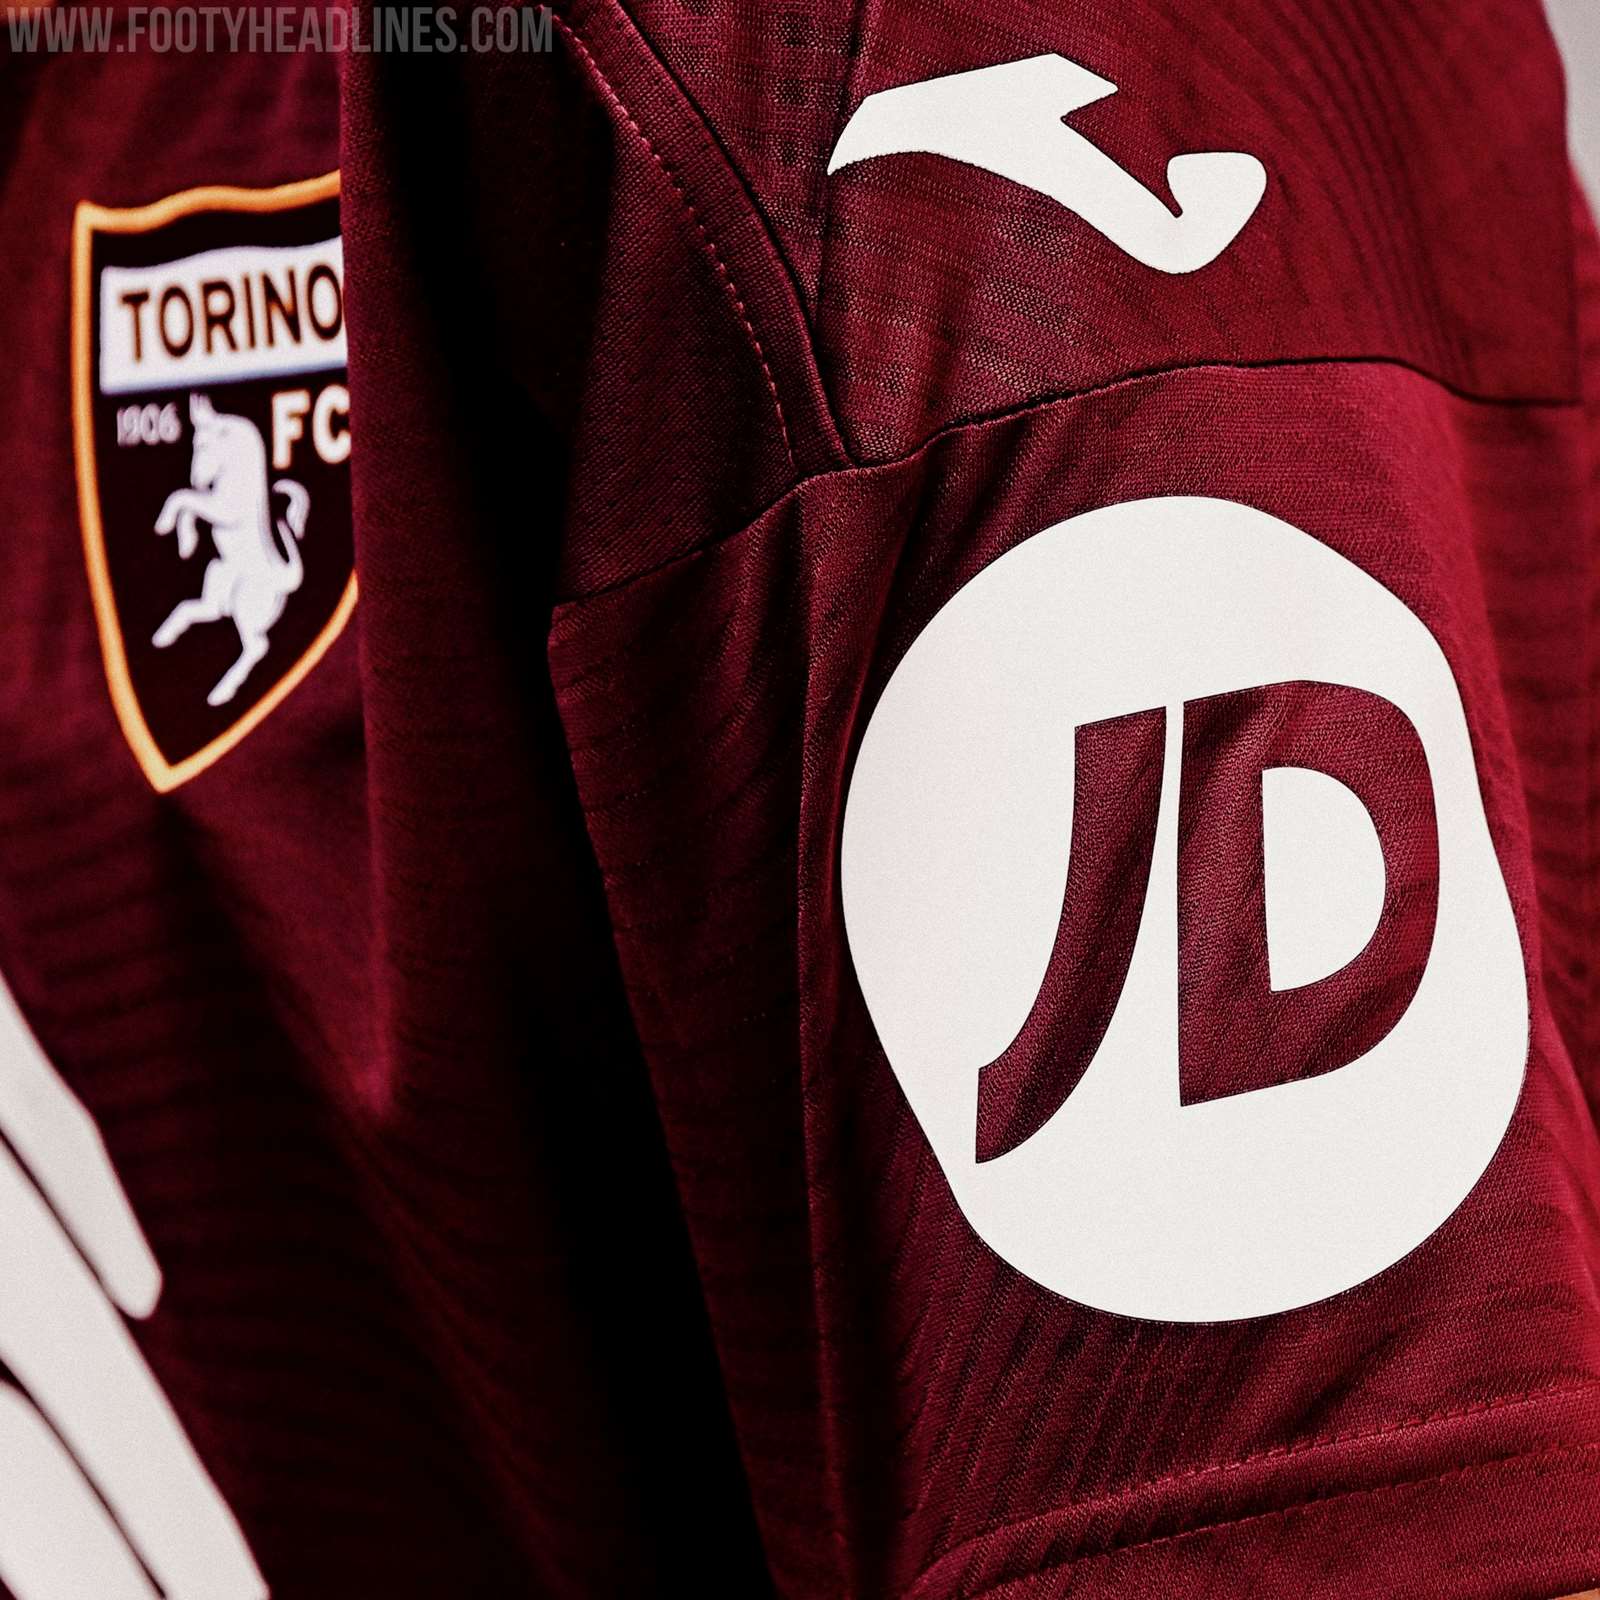 Torino 22-23 Home & Away Kits Released - Footy Headlines